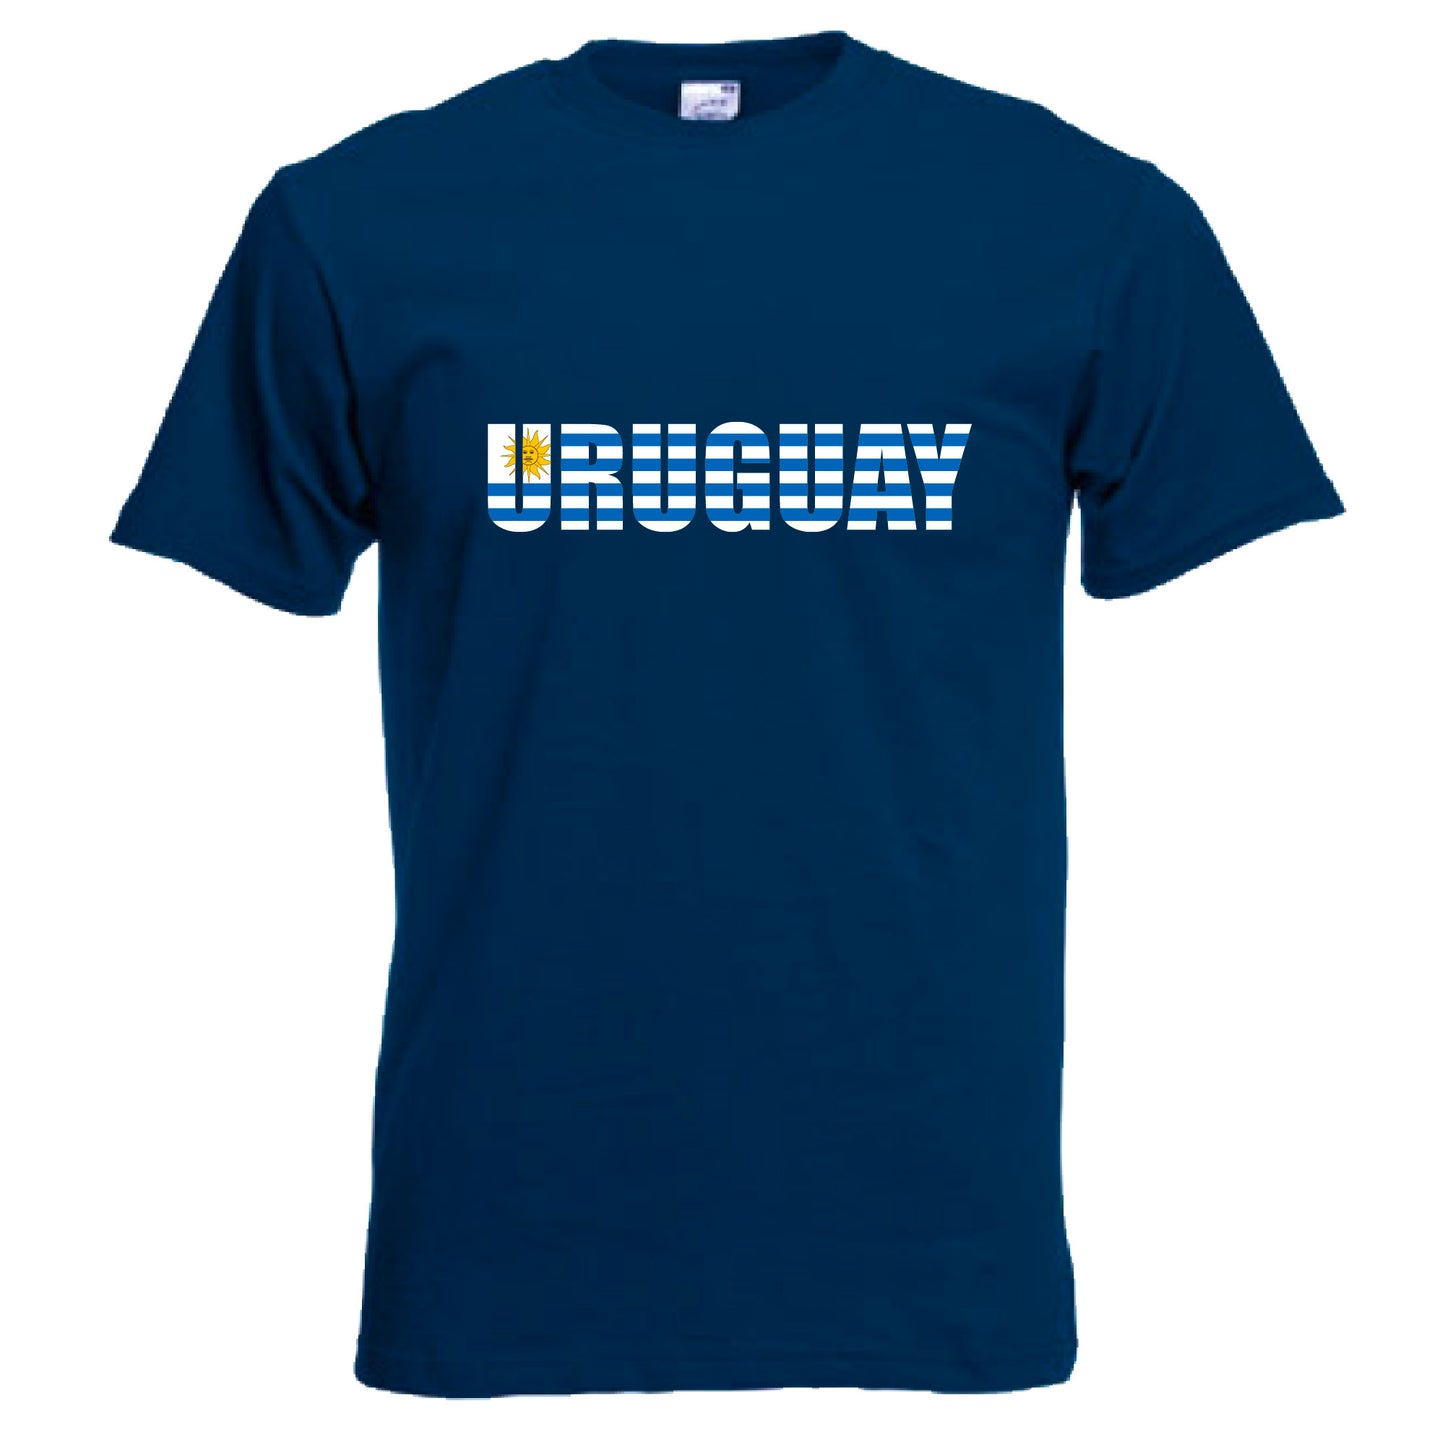 INDIGOS UG - T-Shirt Herren - Uruguay - Schriftzug - Fussball